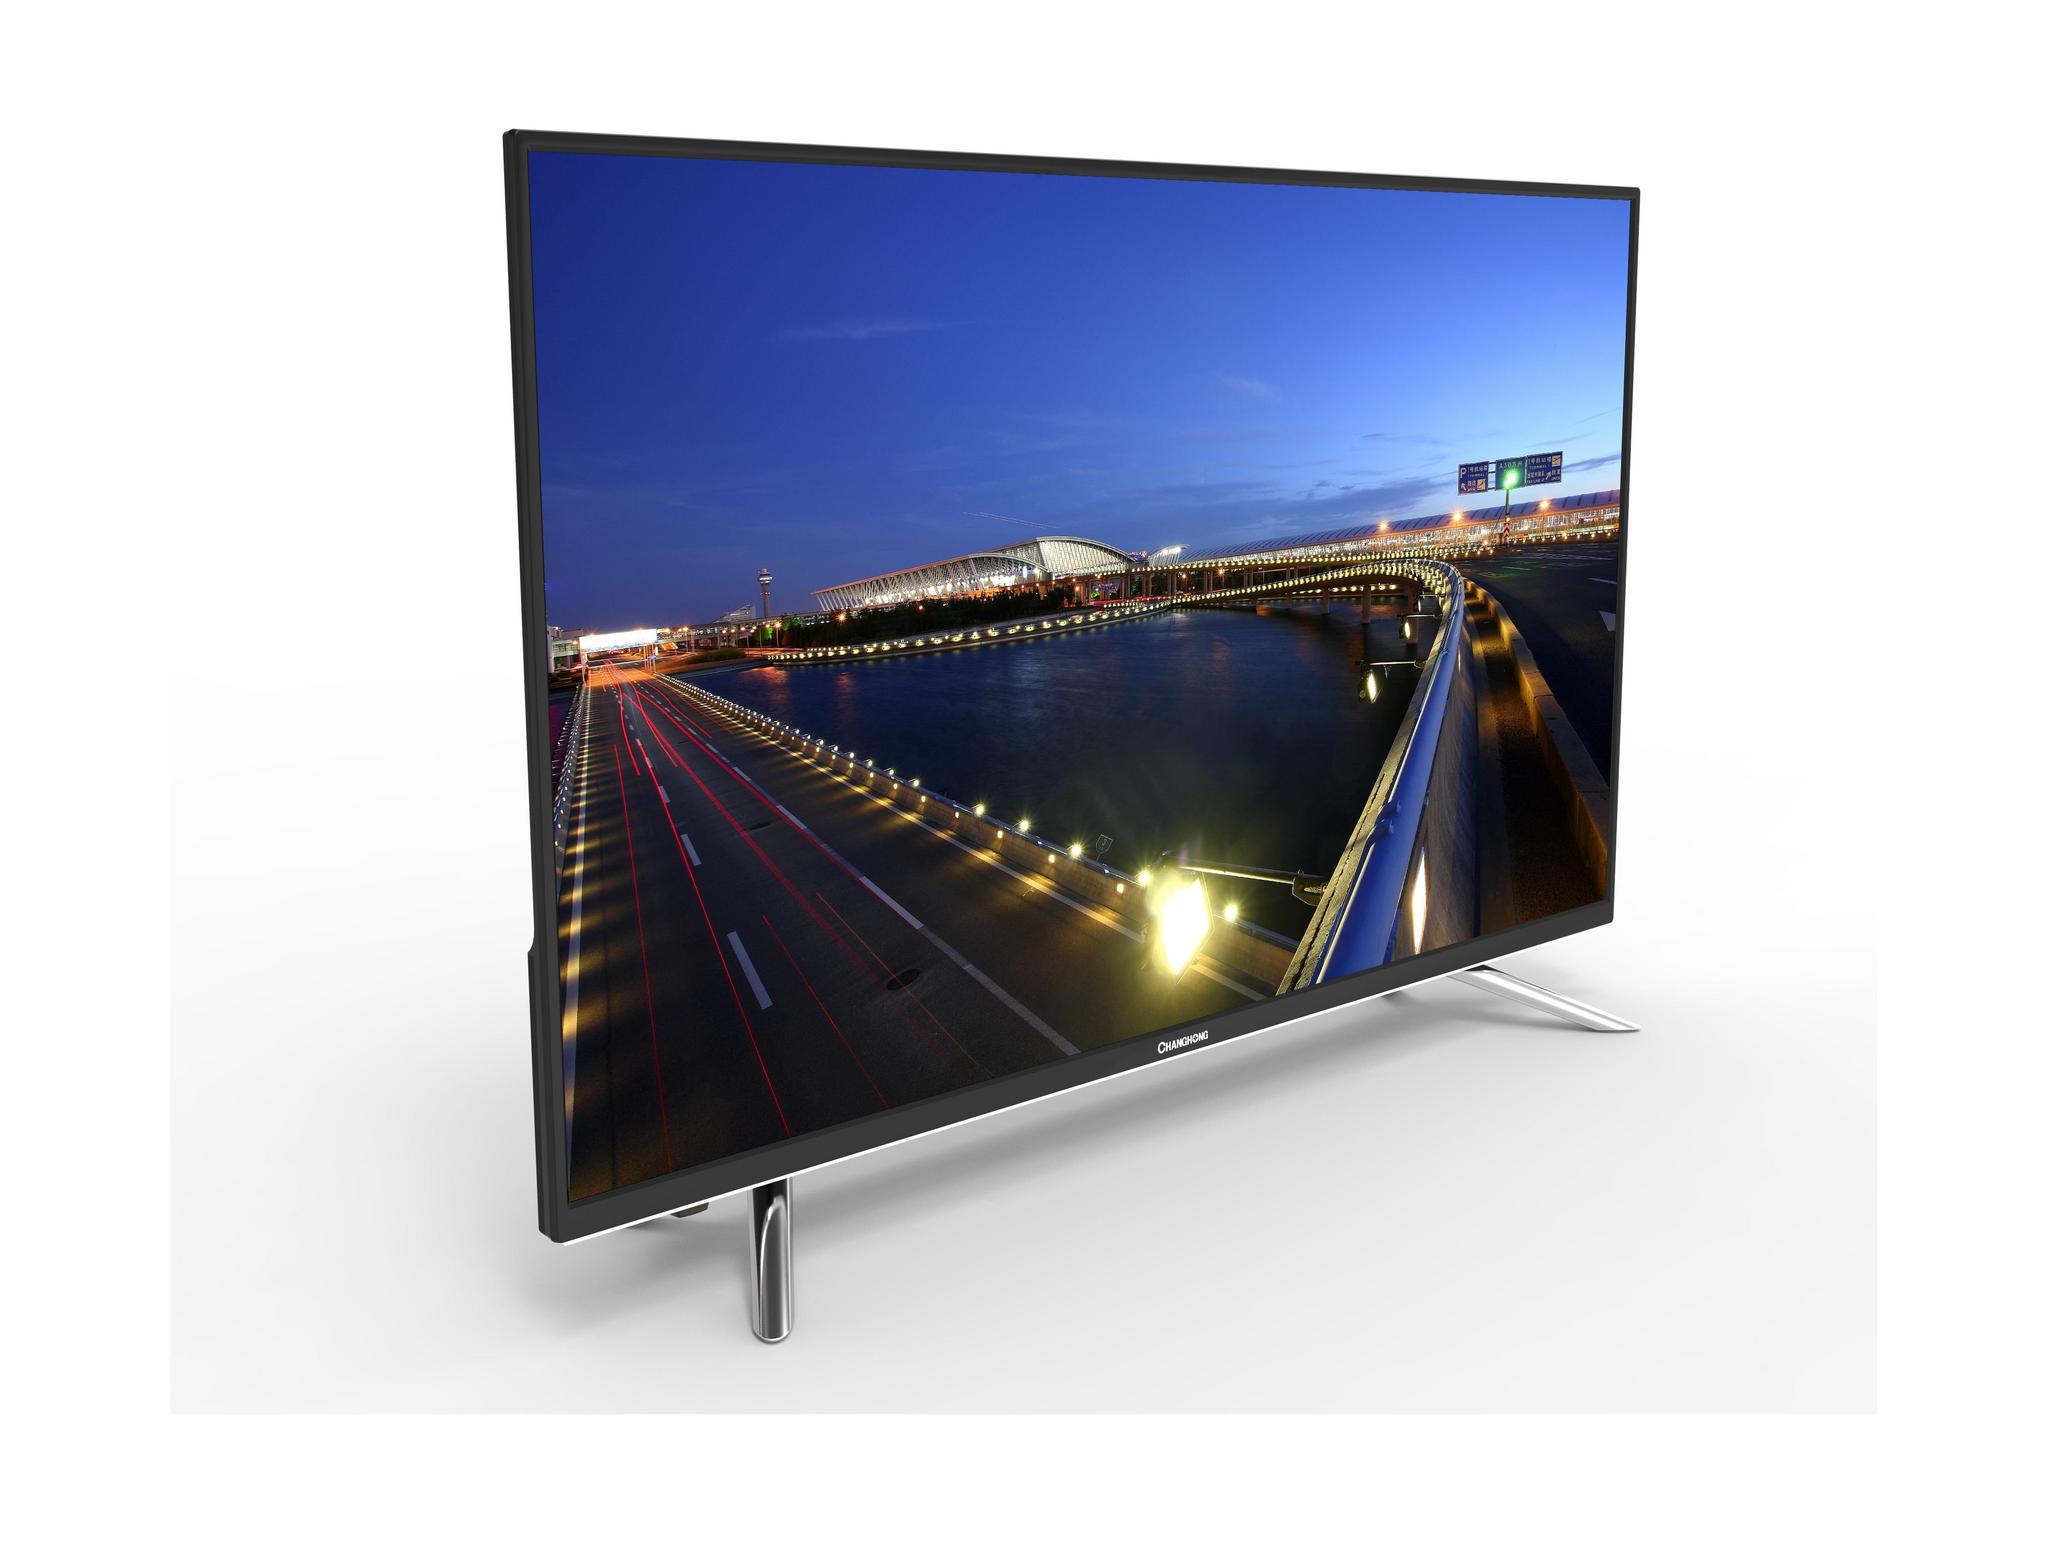 Changhong 49-inch Full-HD LED TV LED49D2200